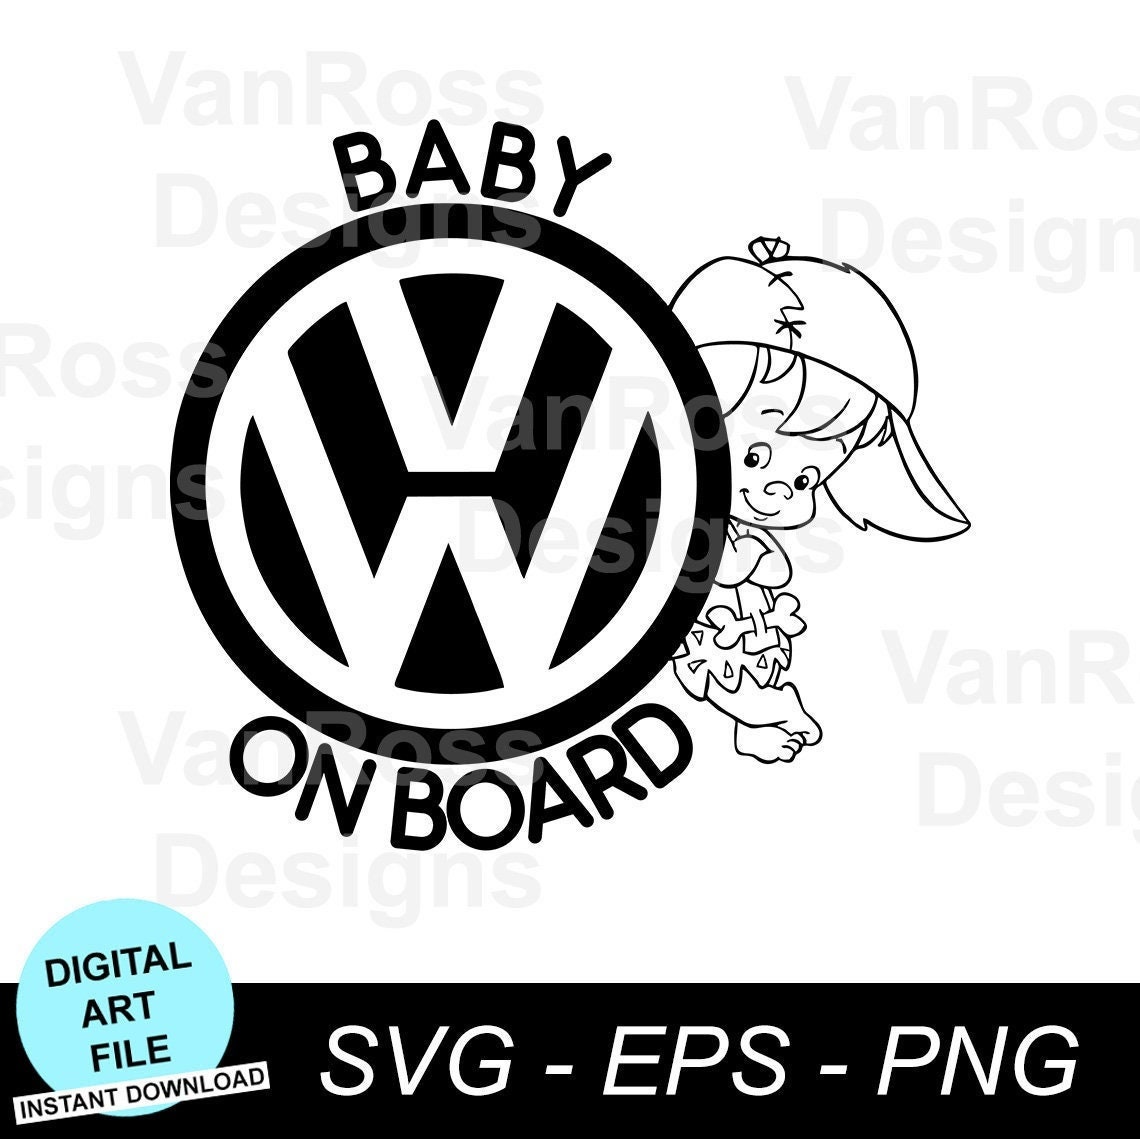 Kit stickers autocollants ailes VW Volkswagen logo